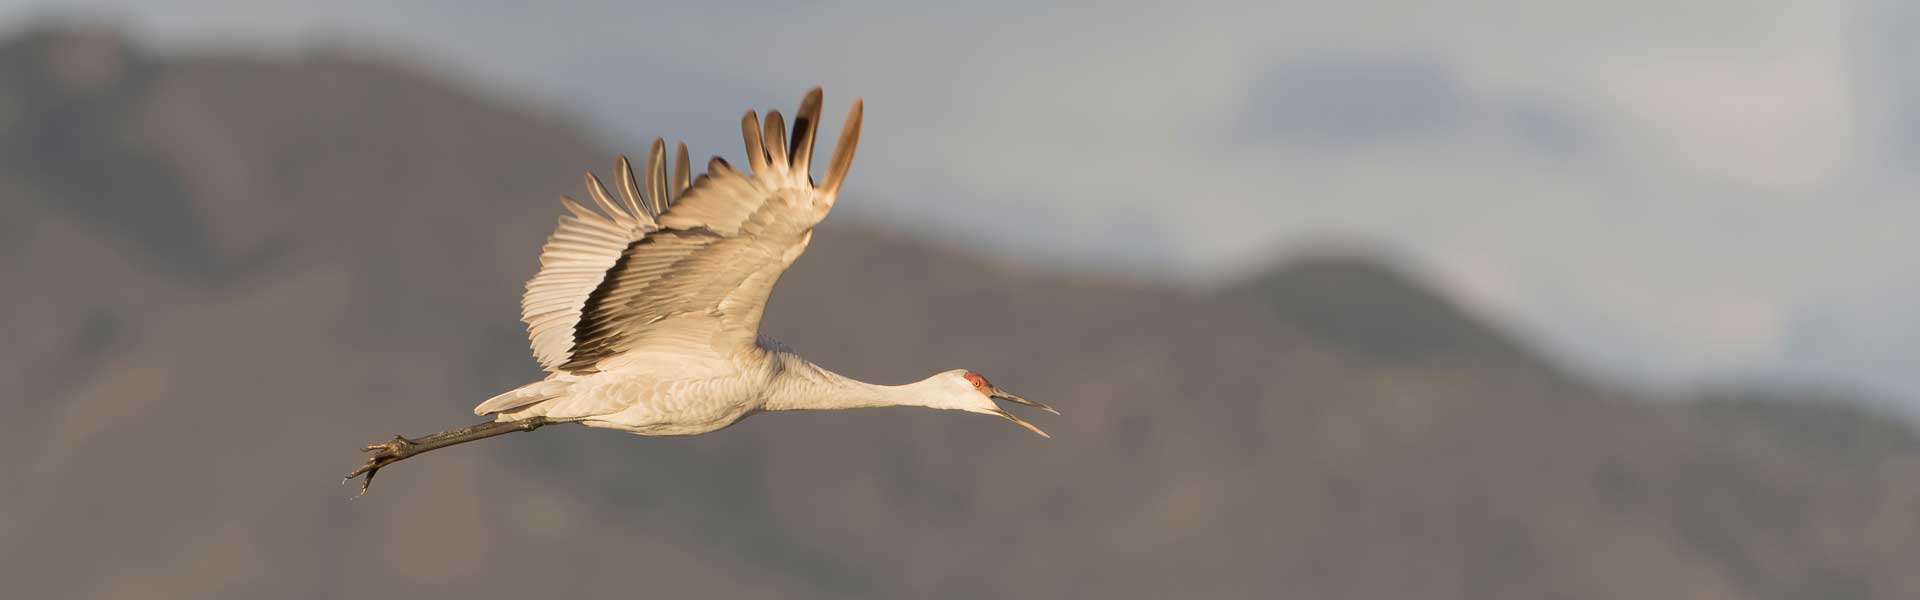 A sandhill crane in flight.